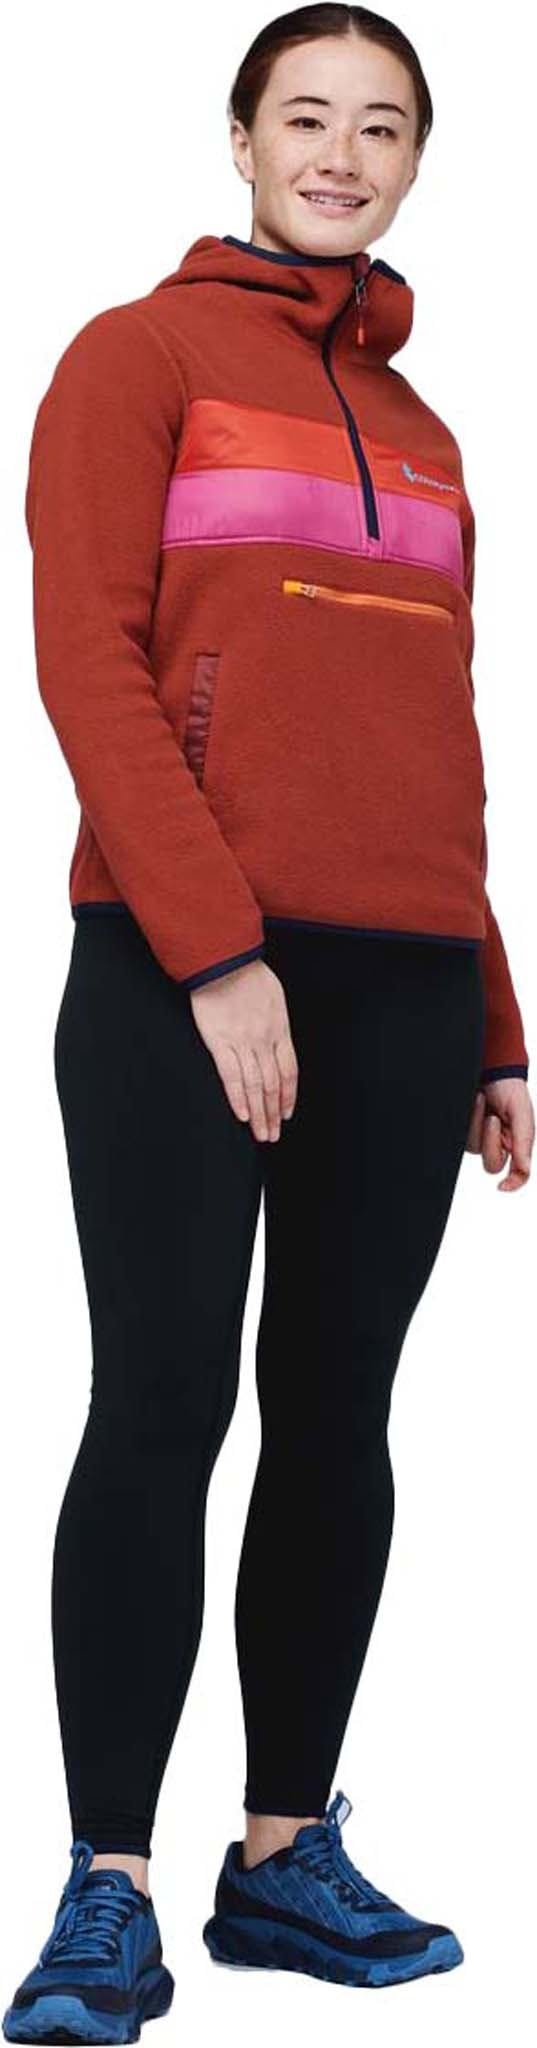 Product gallery image number 6 for product Teca Fleece Hooded Half-Zip Pullover - Women's